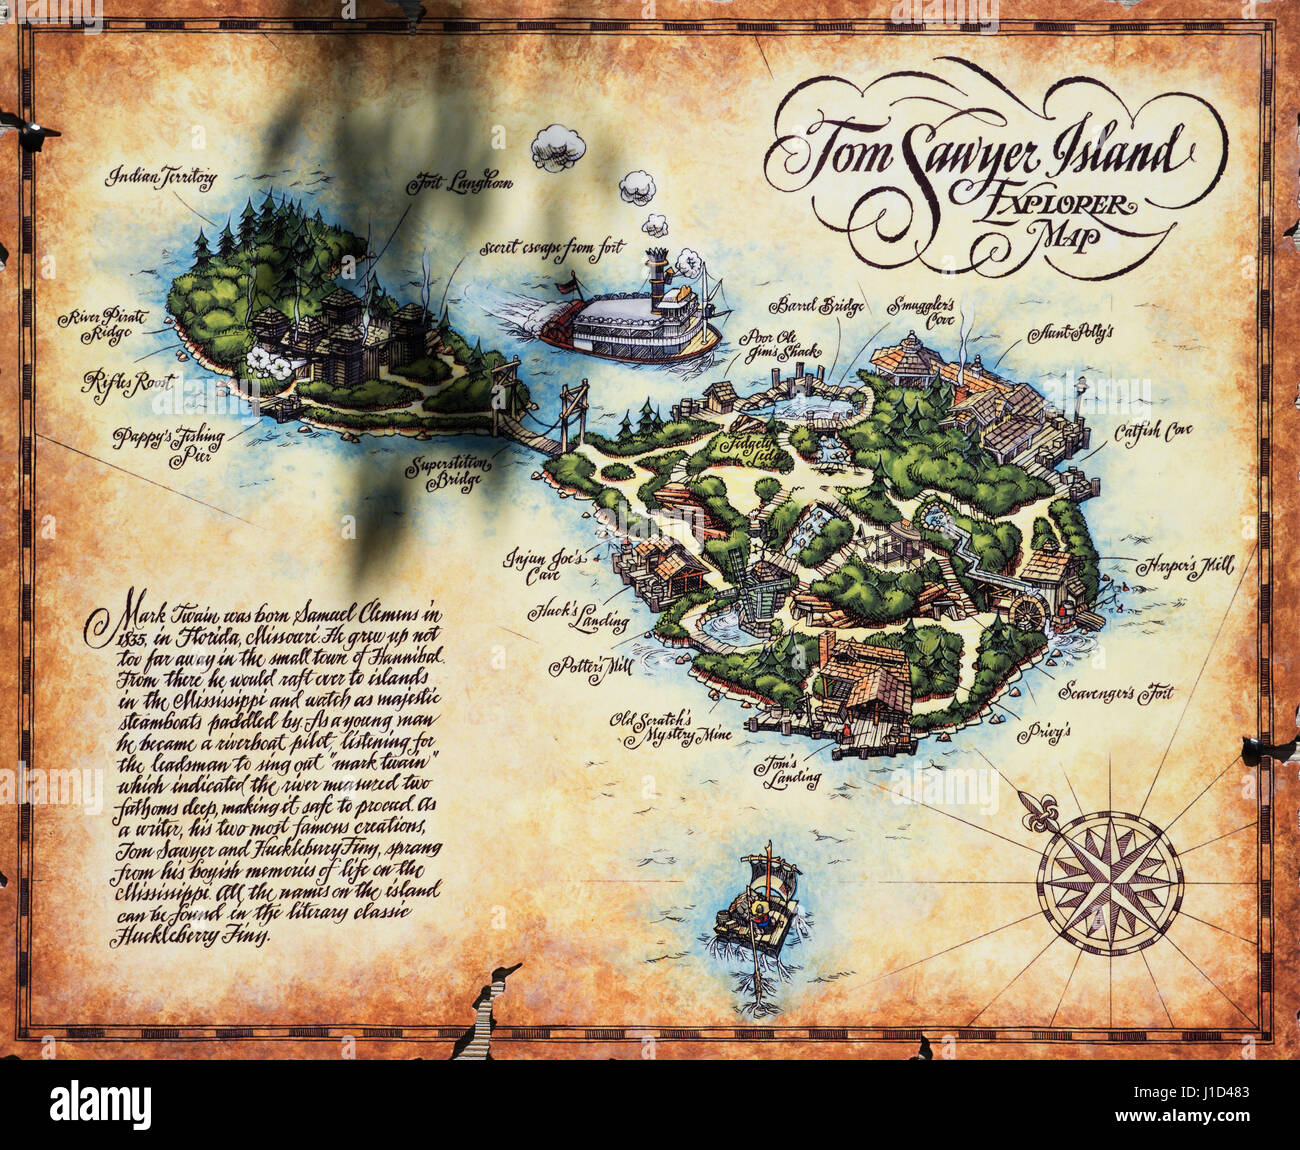 Tom Sawyer Island Explorer Map, in Frontierland at the Magic Kingdom, Disney World Resort, Orlando Florida Stock Photo